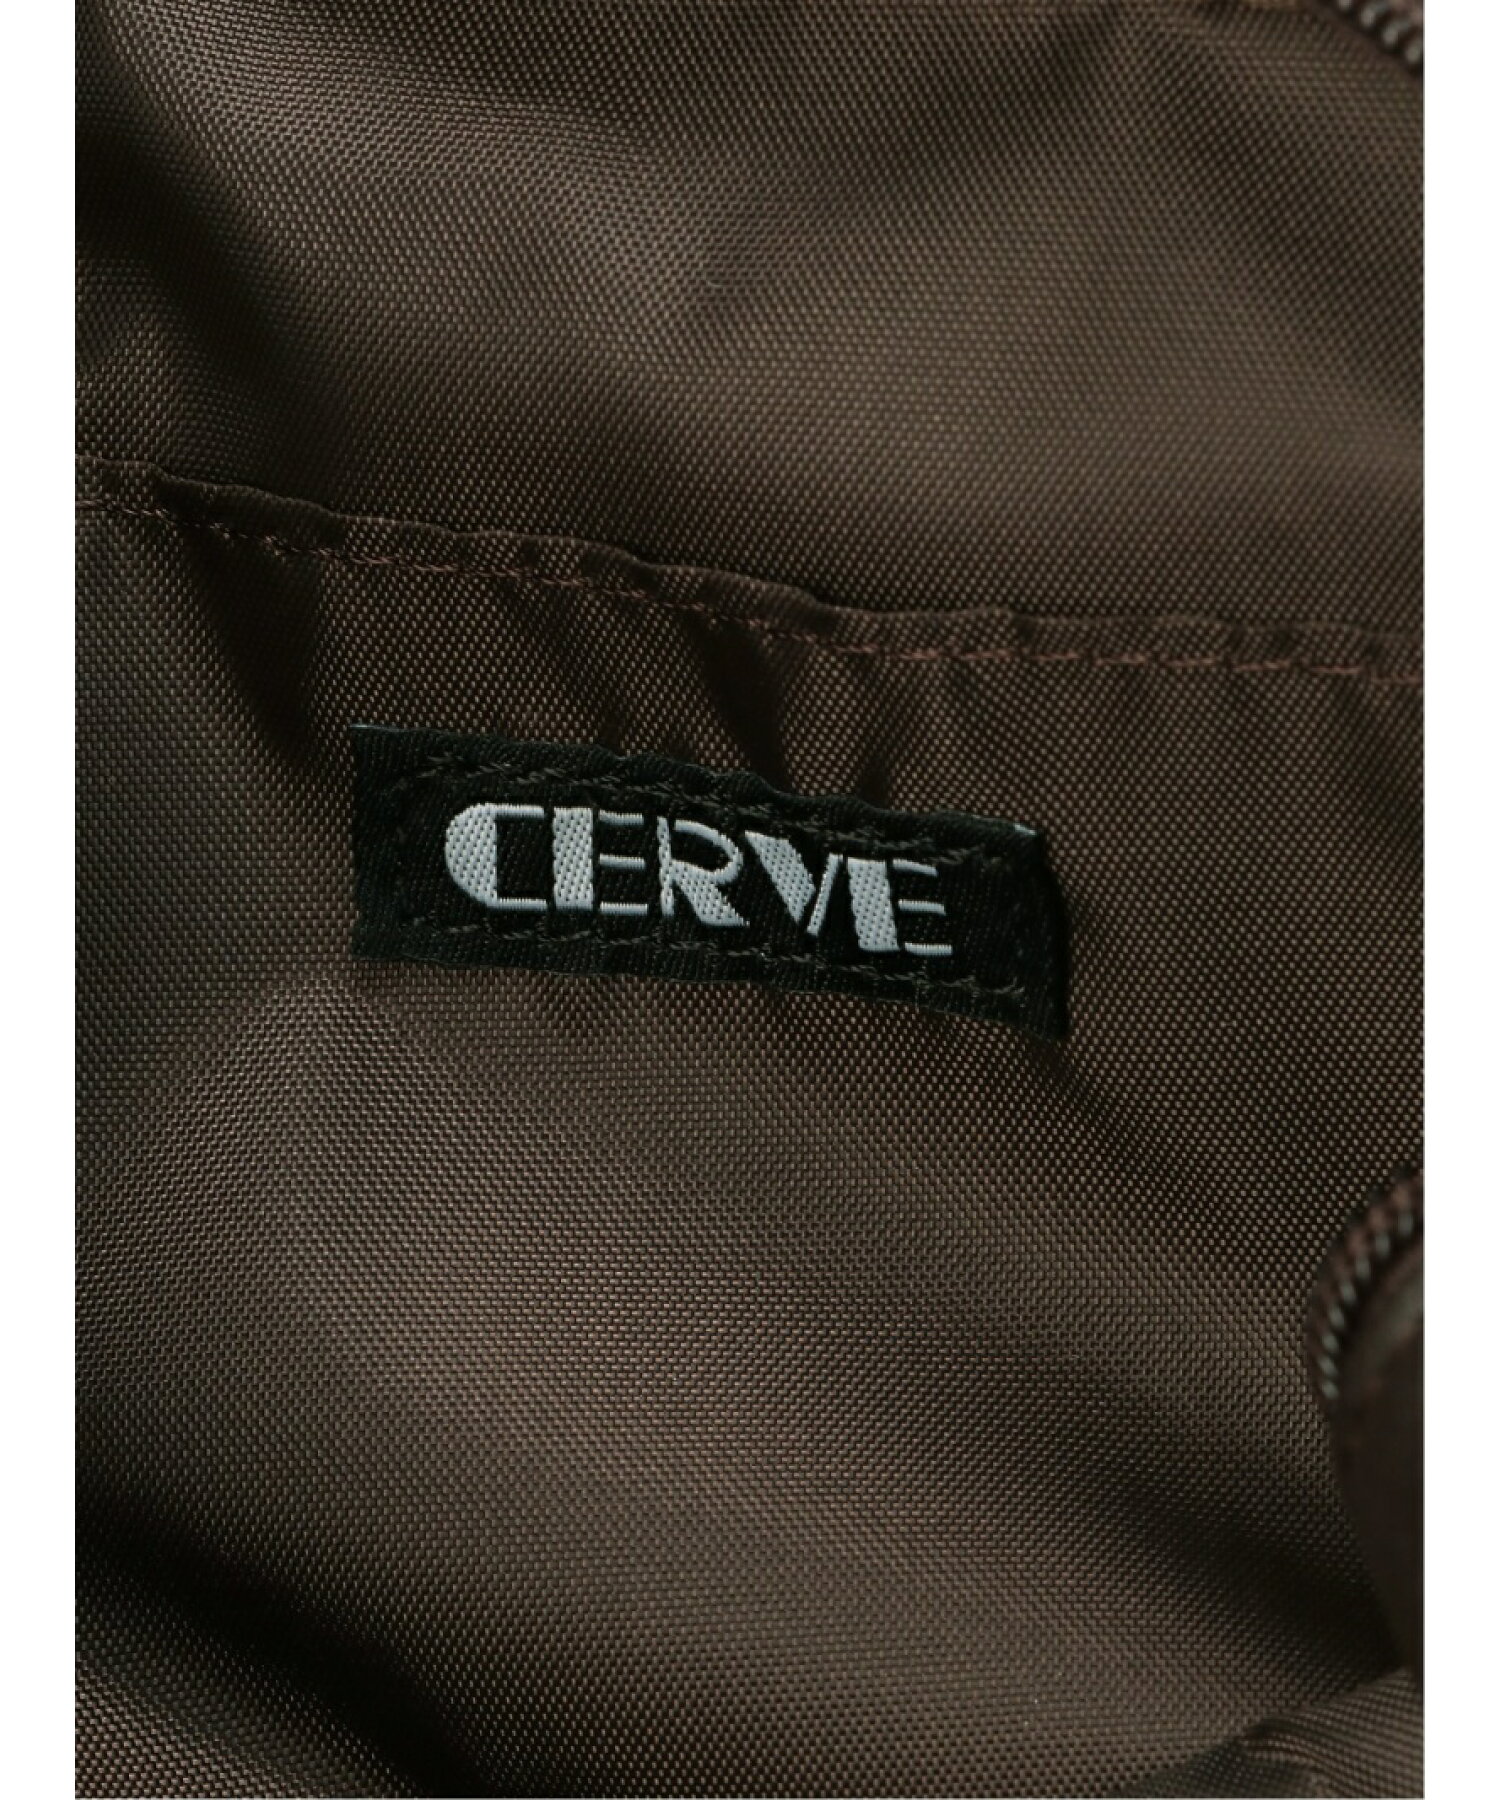 CERVE/(M)型押ショルダーバッグ